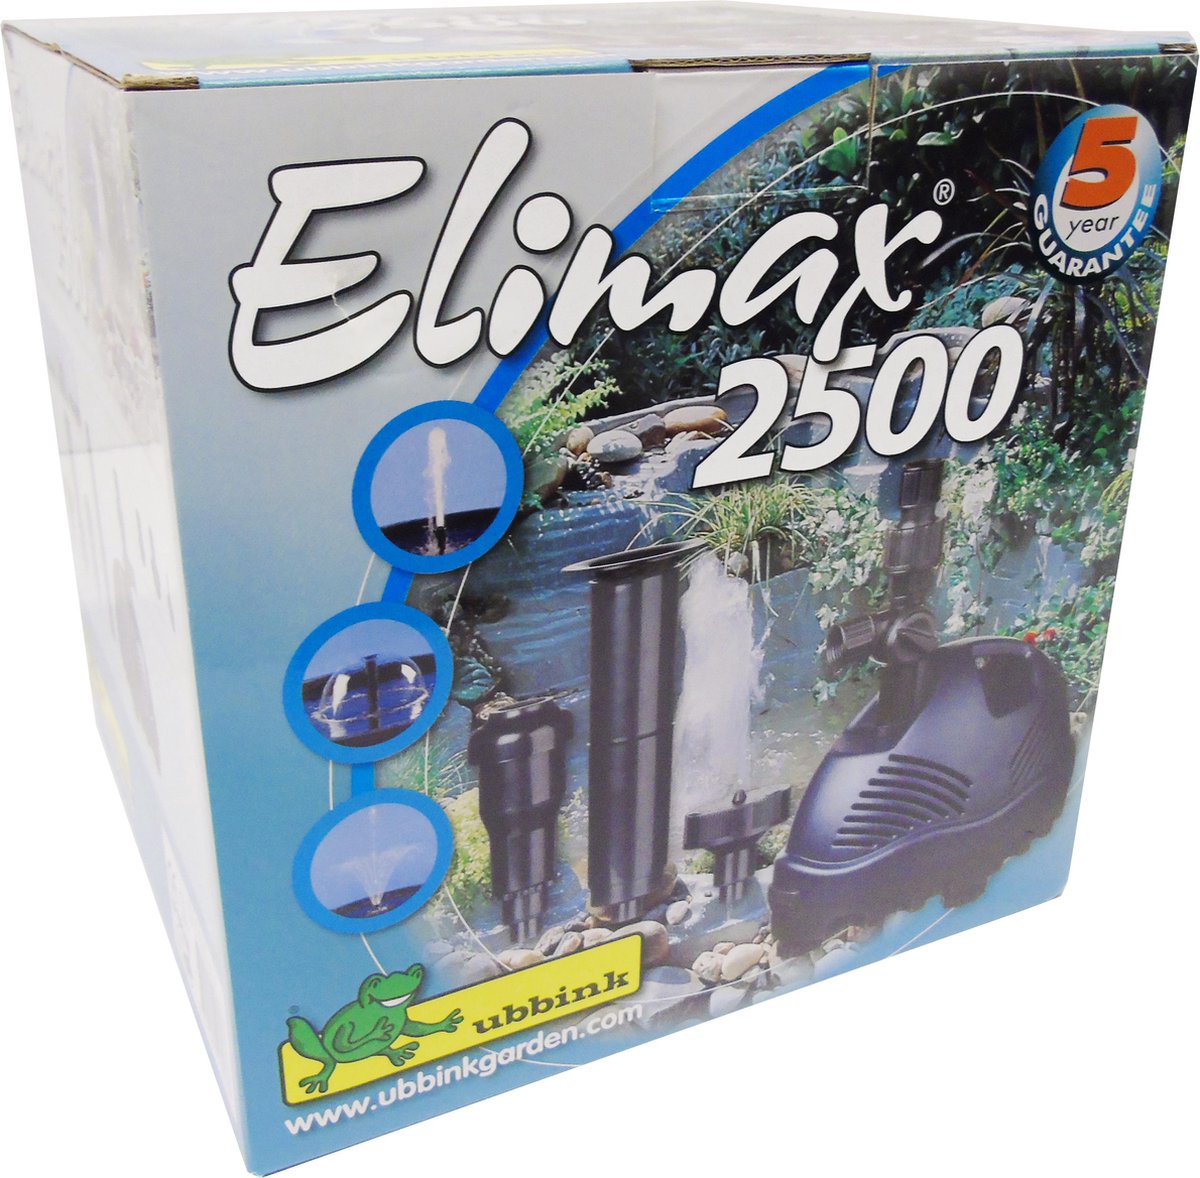 Pompe de fontaine Elimax 2500 | bol.com